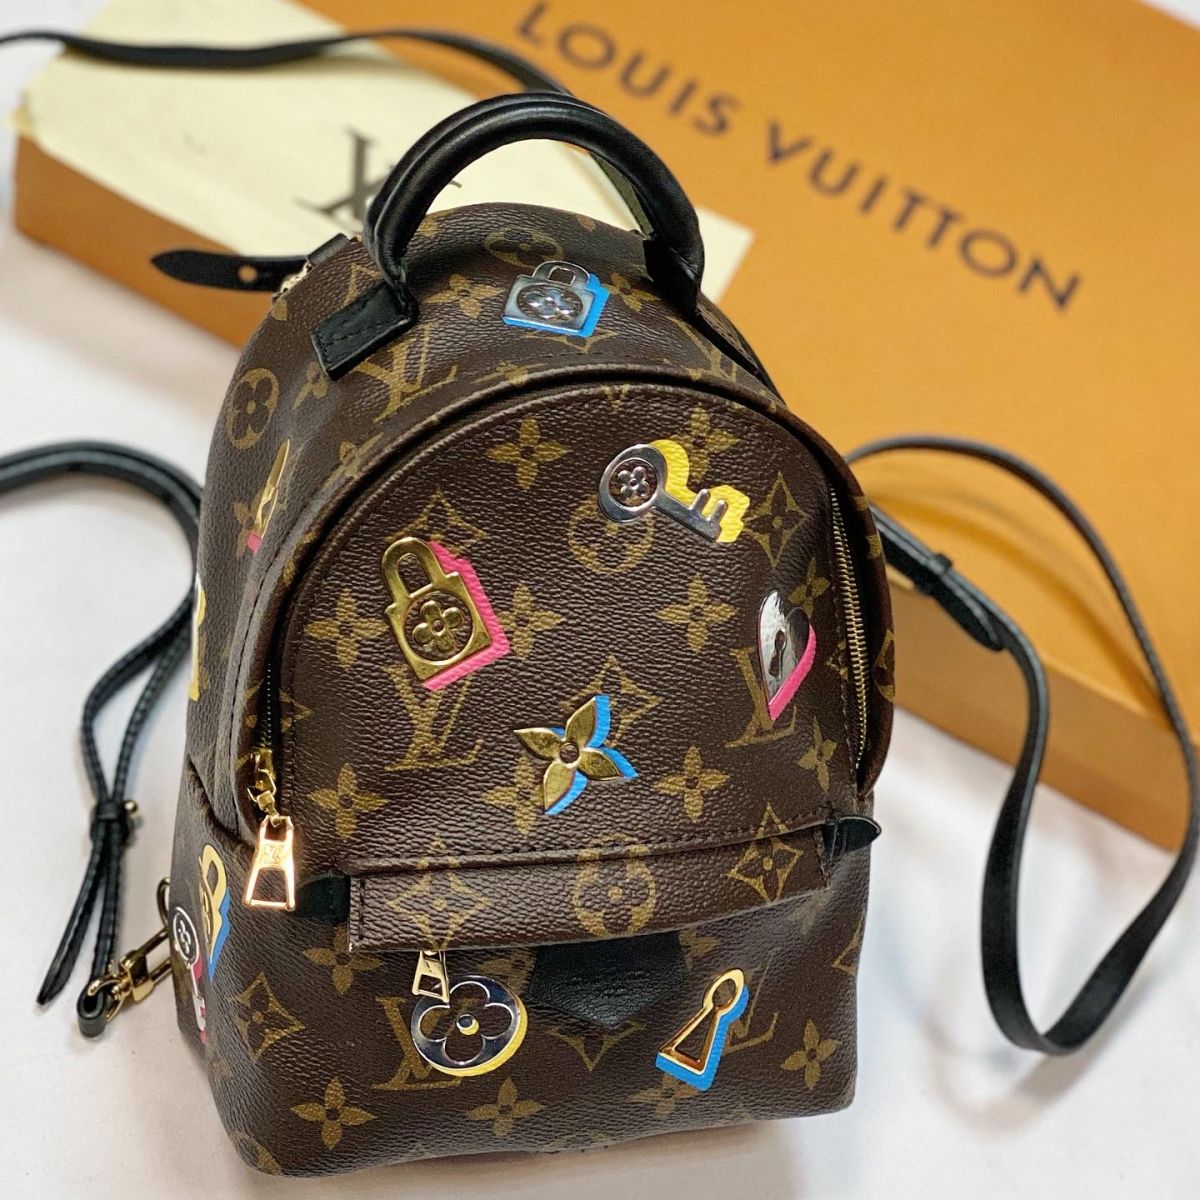 Рюкзак Louis Vuitton размер 17/20 цена 153 847 руб 